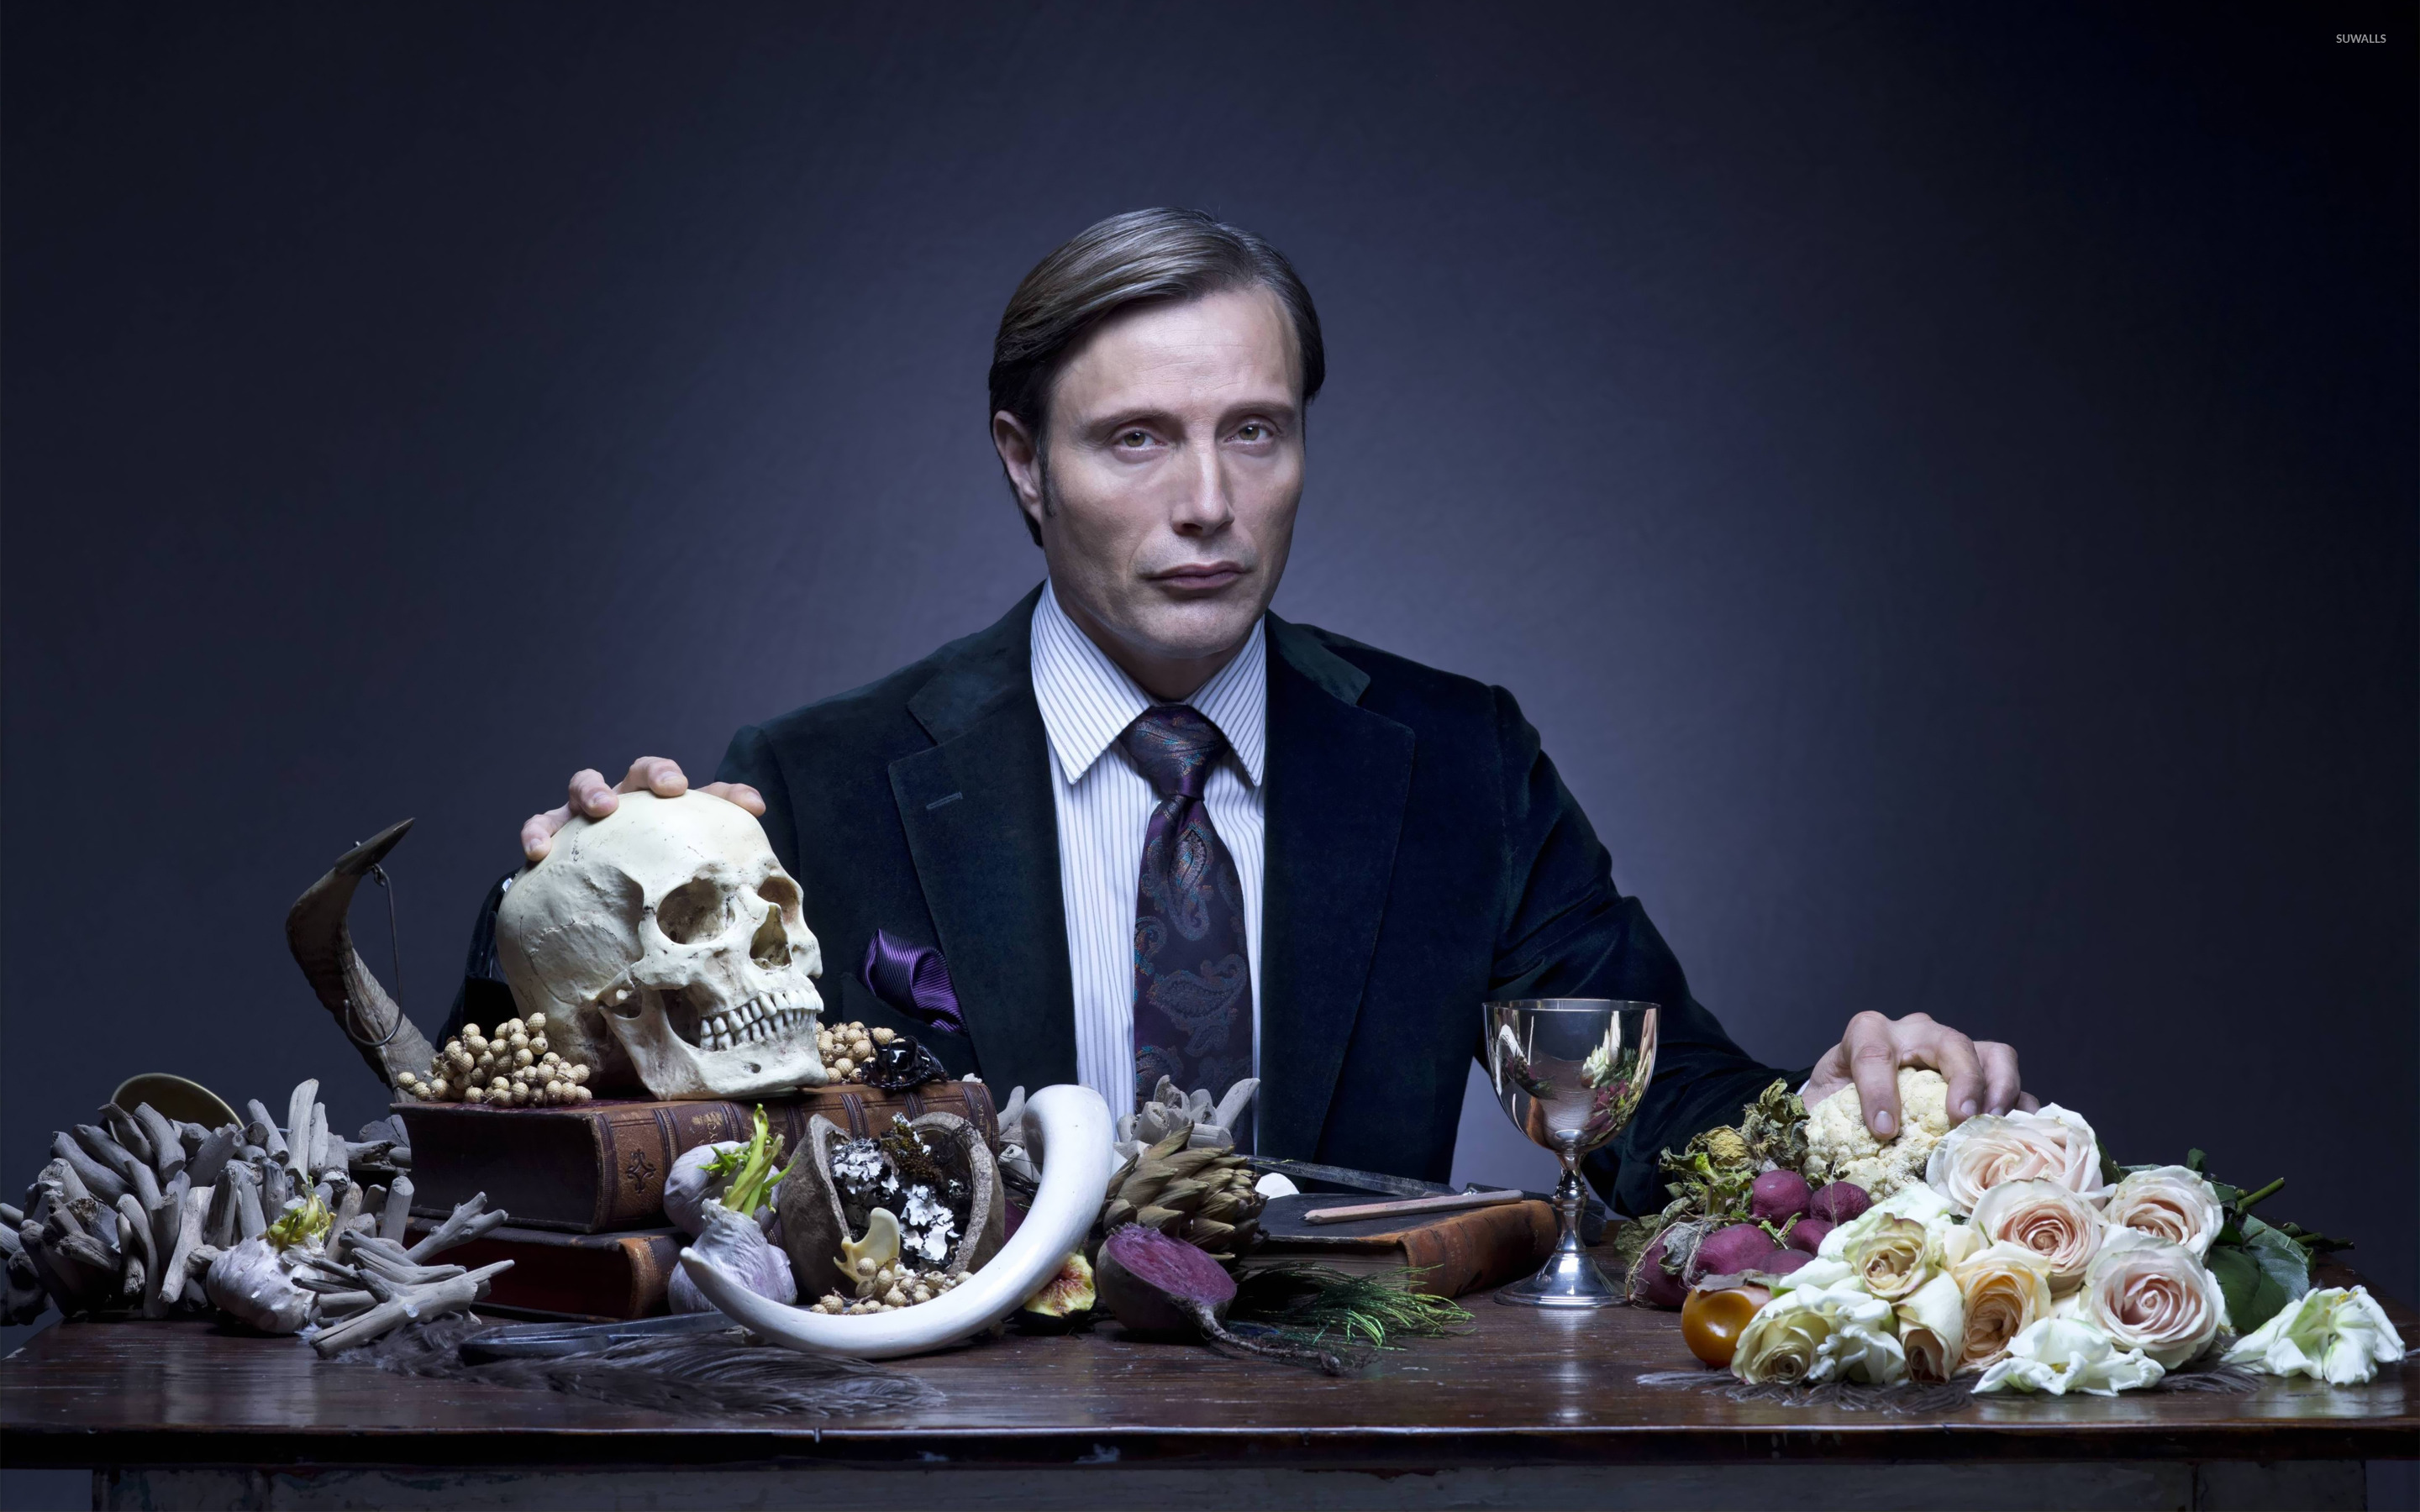 Dr Hannibal Lecter Wallpaper Tv Show